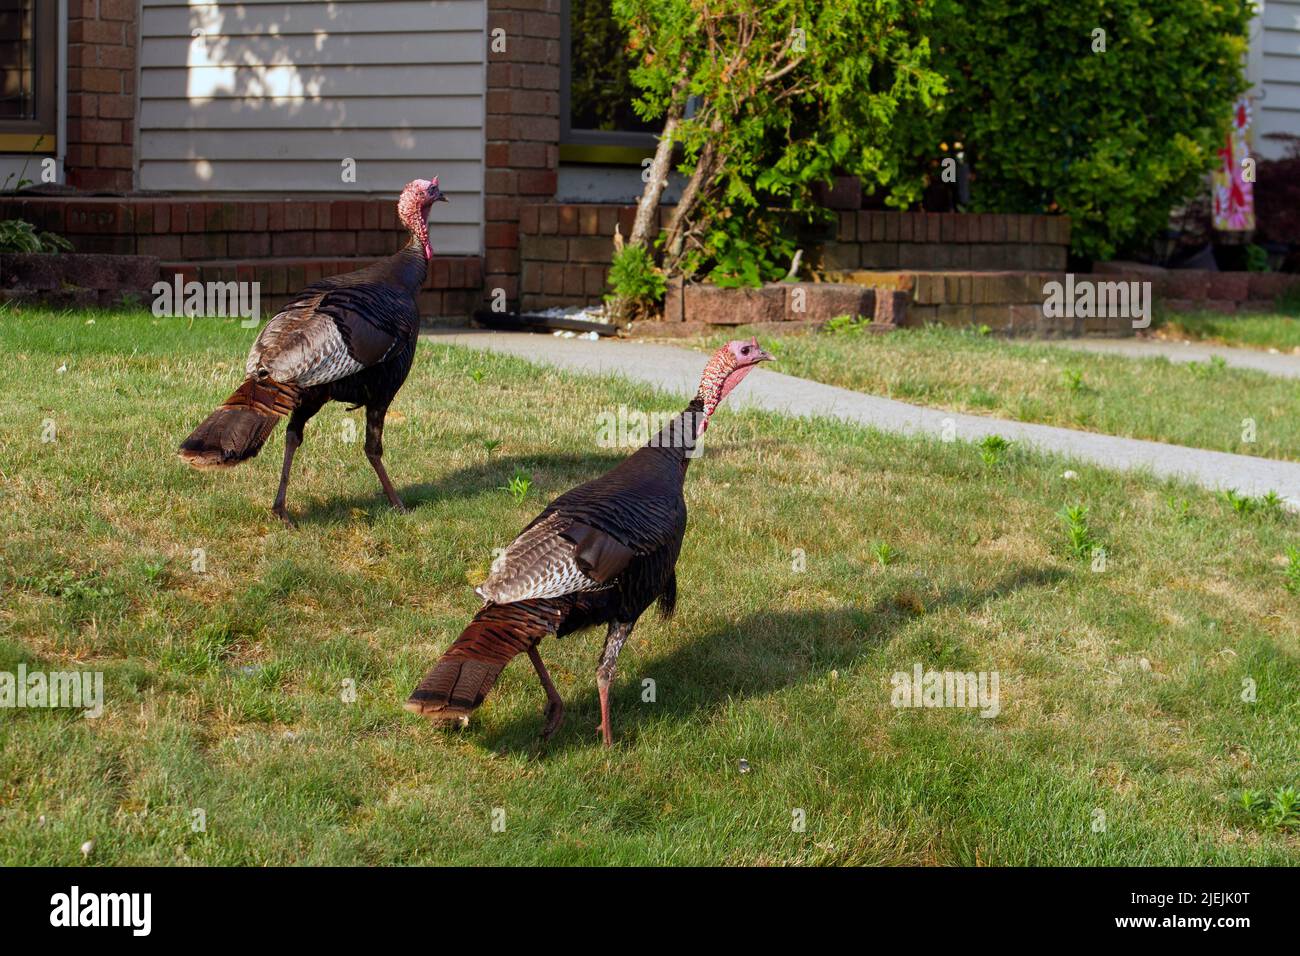 Two Wild turkeys walking through a yard in suburban New Jersey Stock Photo